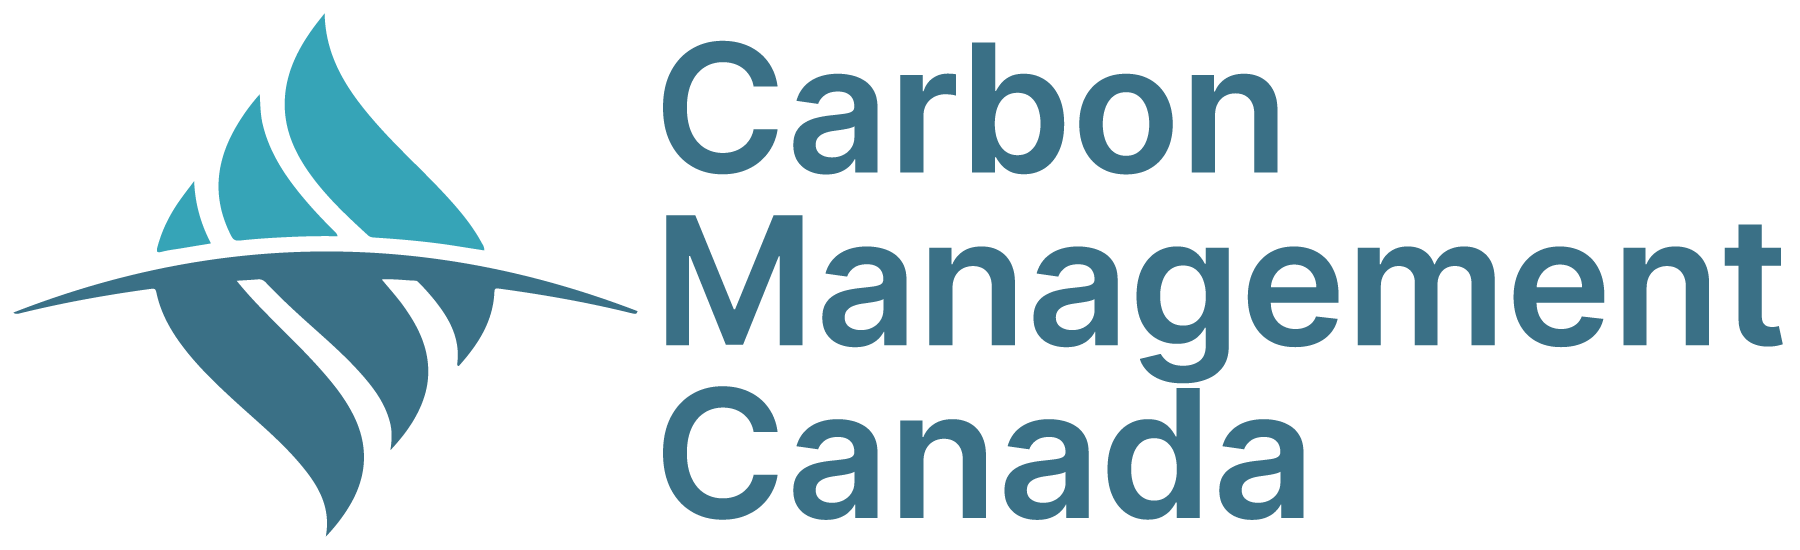 Carbon Management Canada